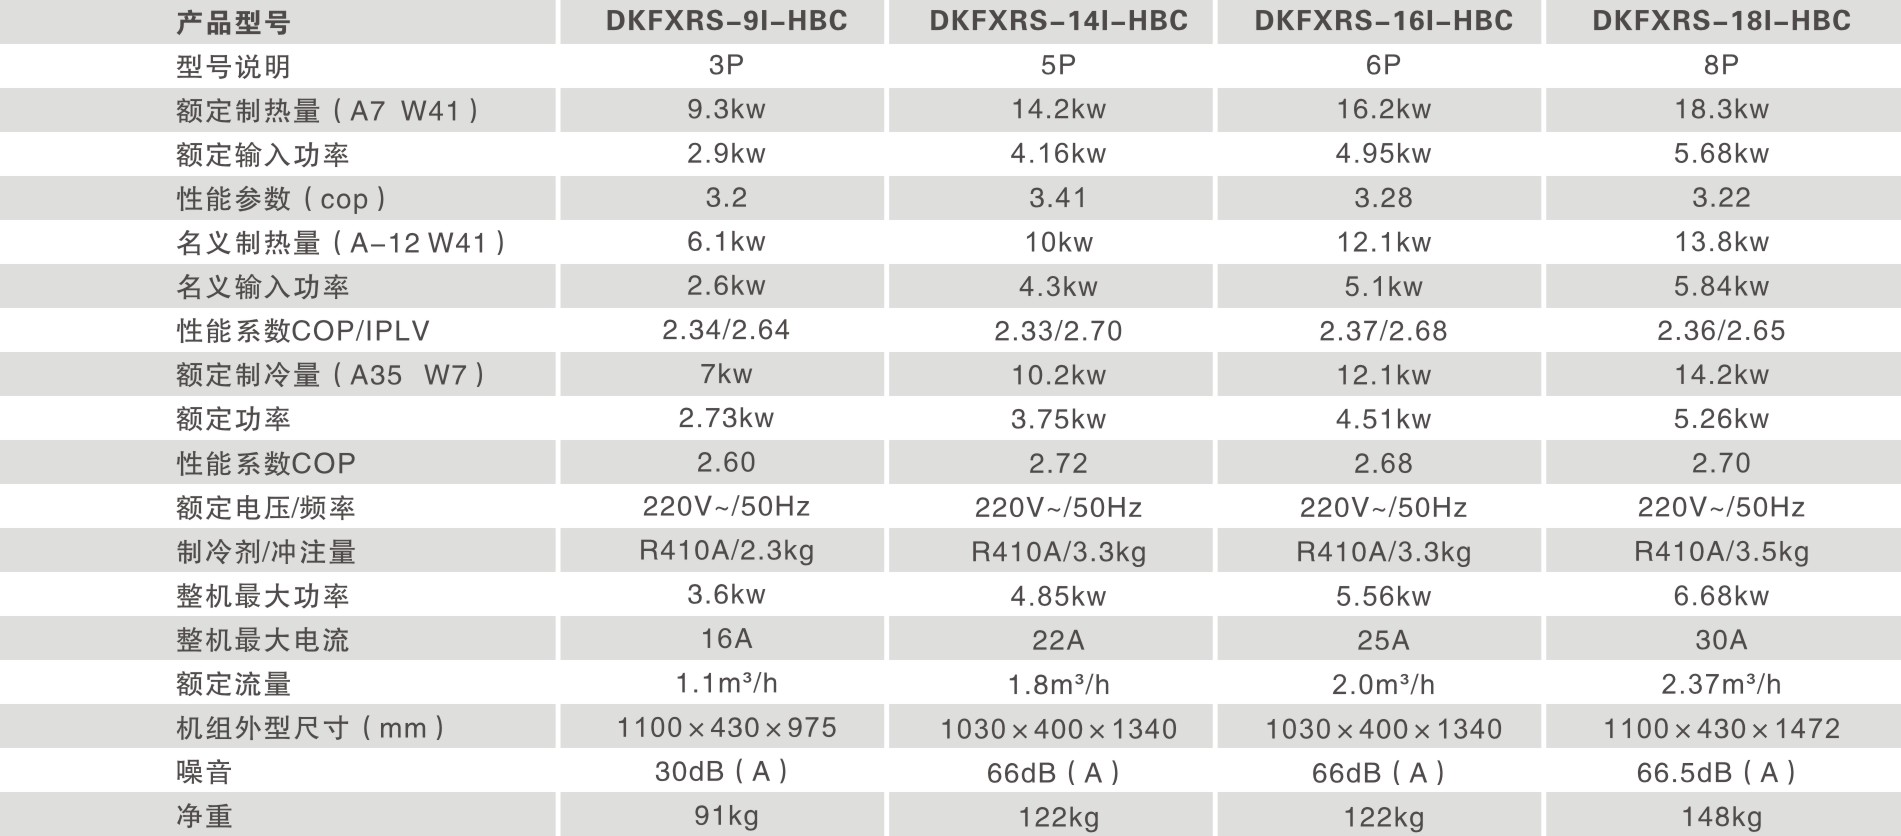 一体变频机DKFXRS-16I-HBC